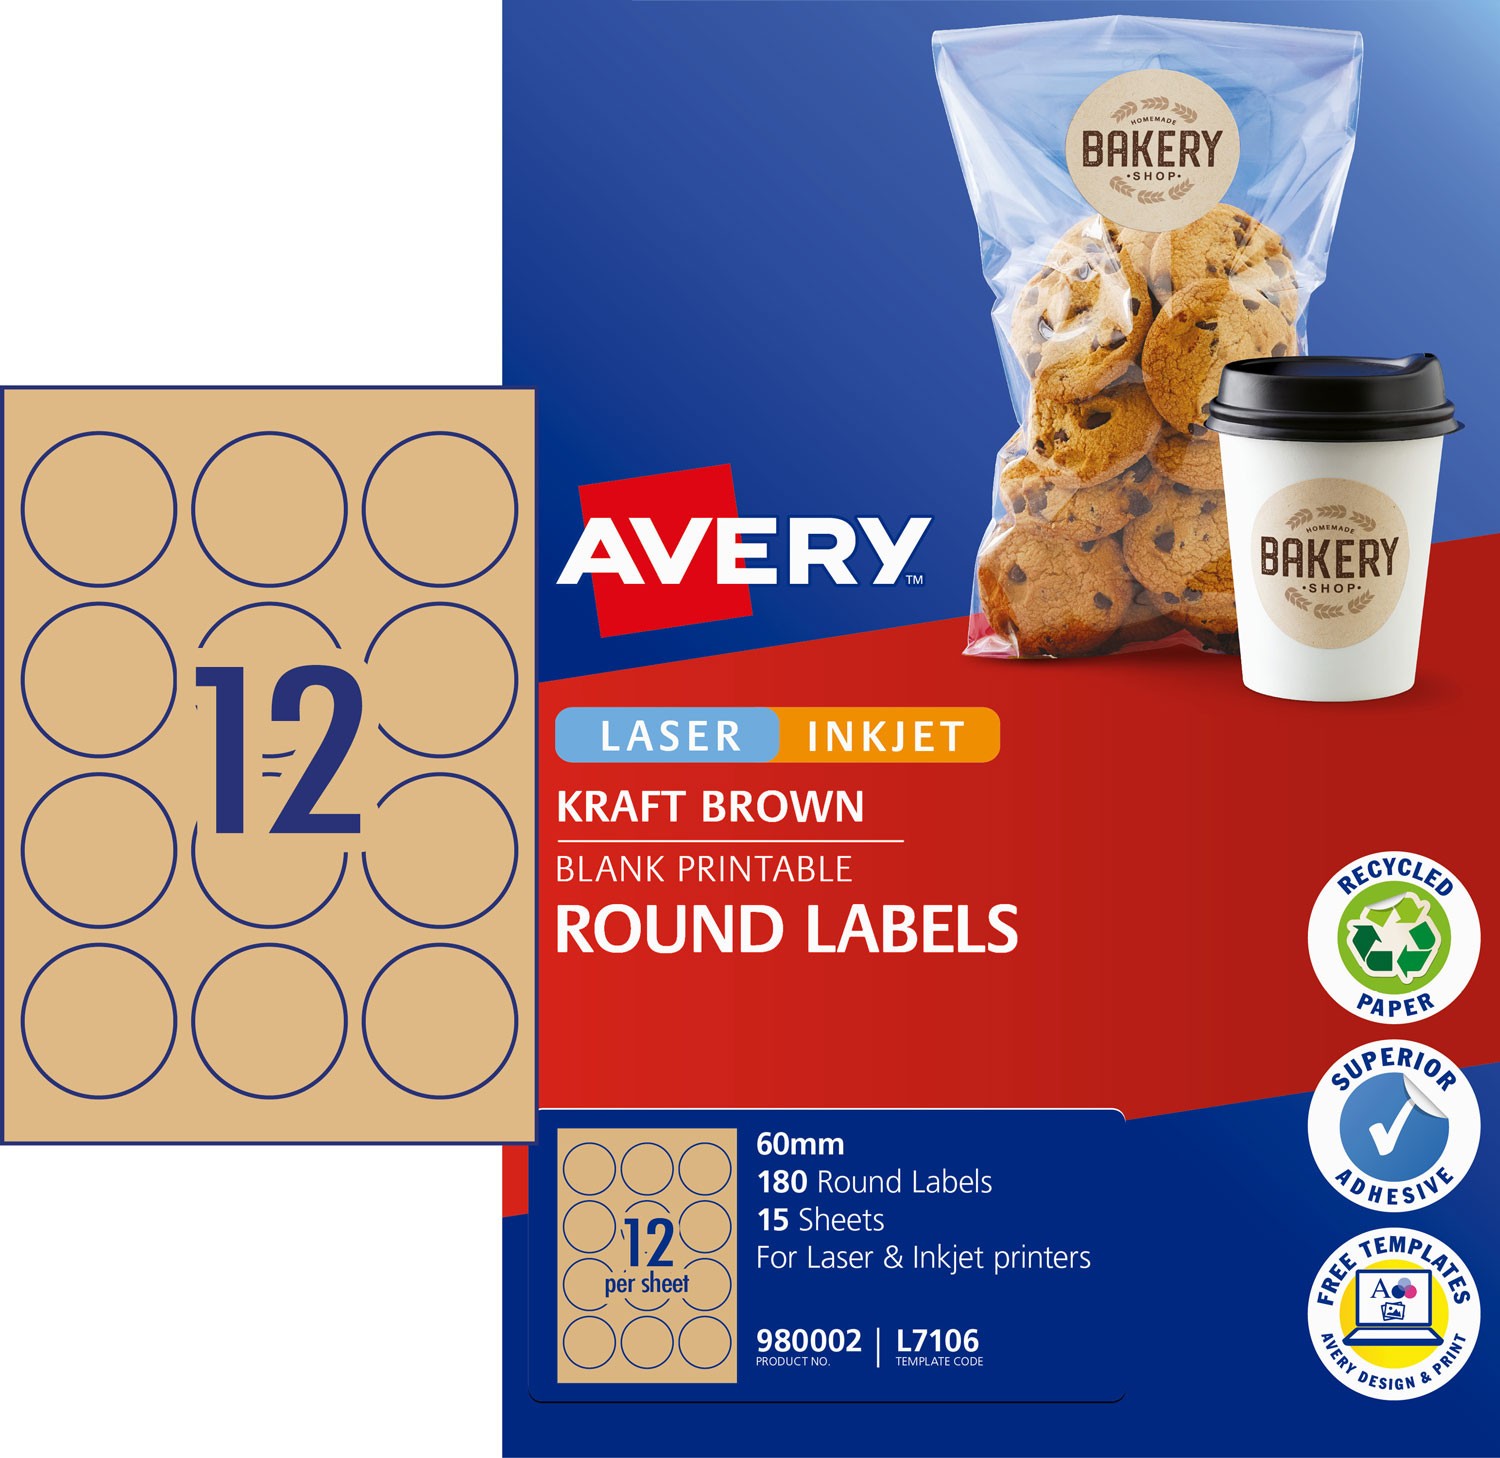 kraft-brown-round-labels-980002-avery-australia